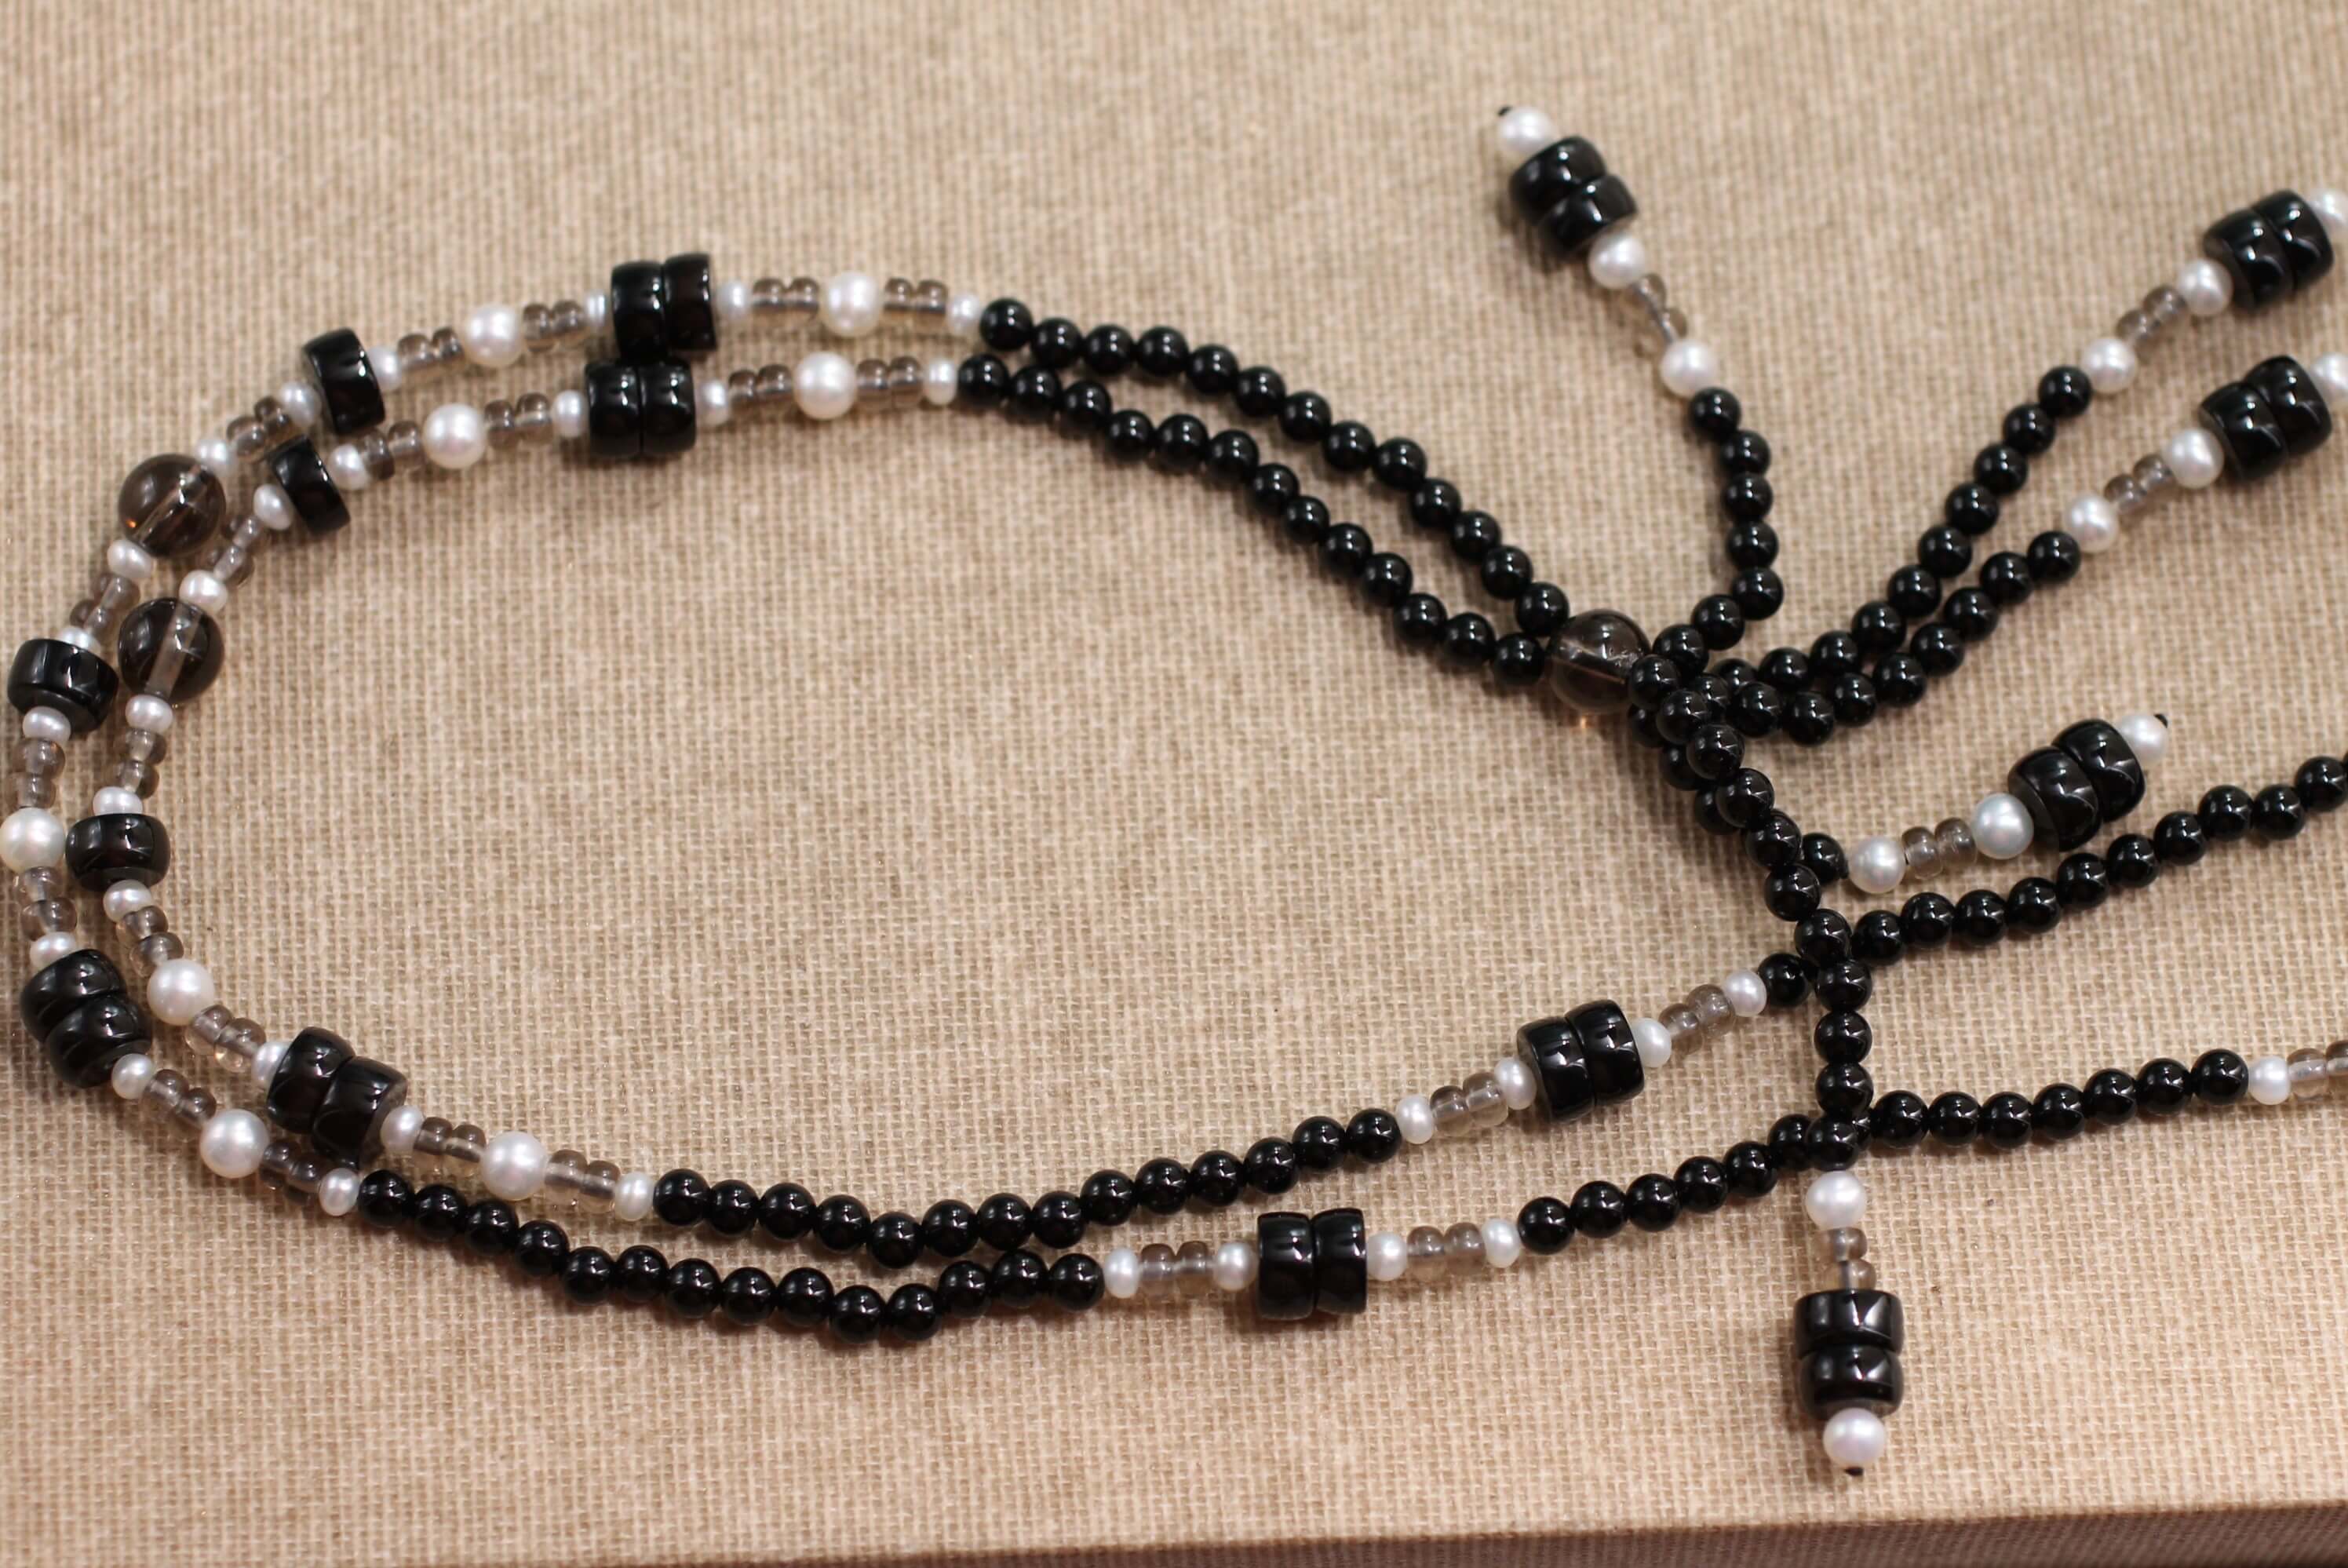 Onyx, Smoky Quartz and Pearls necklace